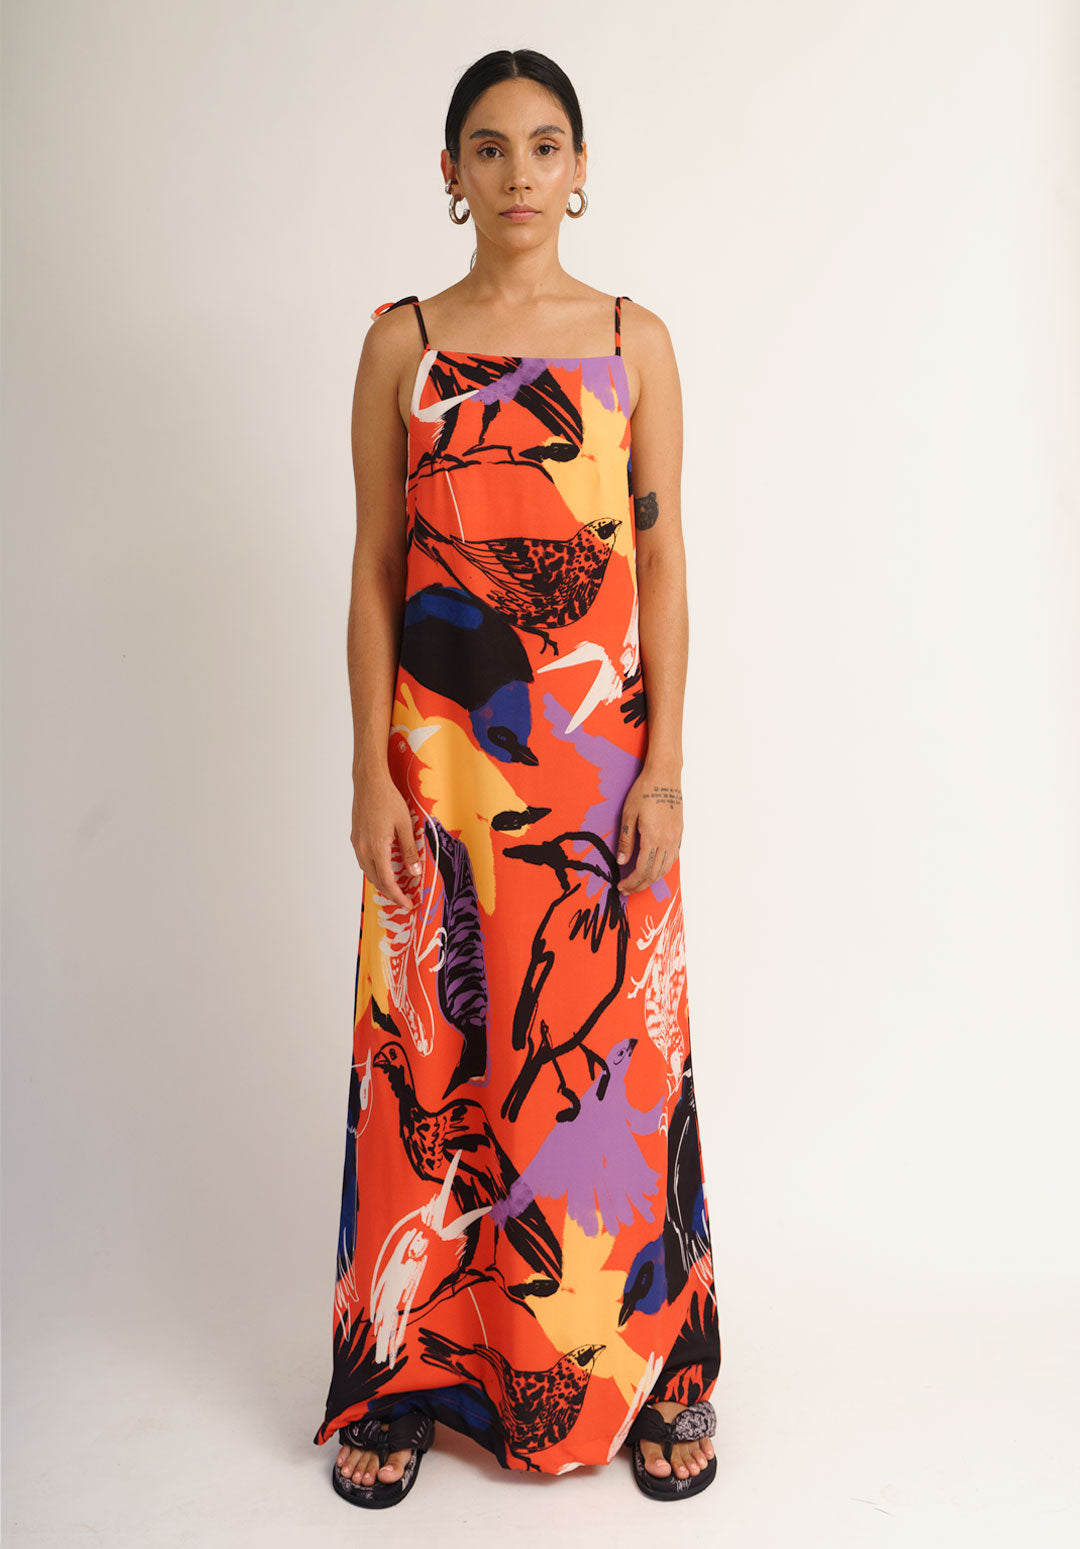 Bienteveo Terracotta Dress